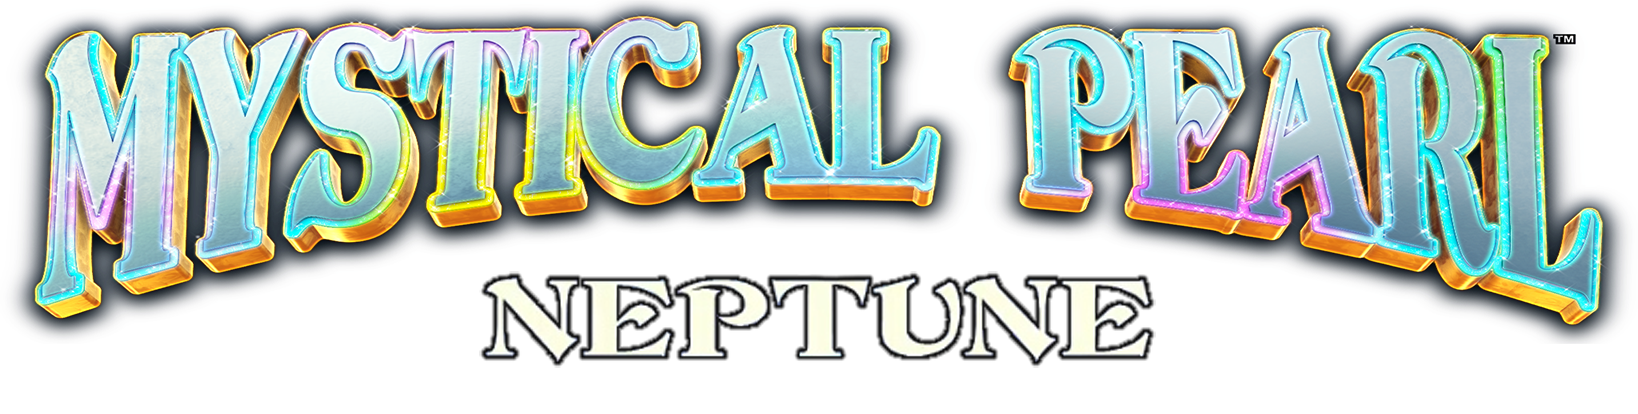 Mystical Pearl Neptune Logo